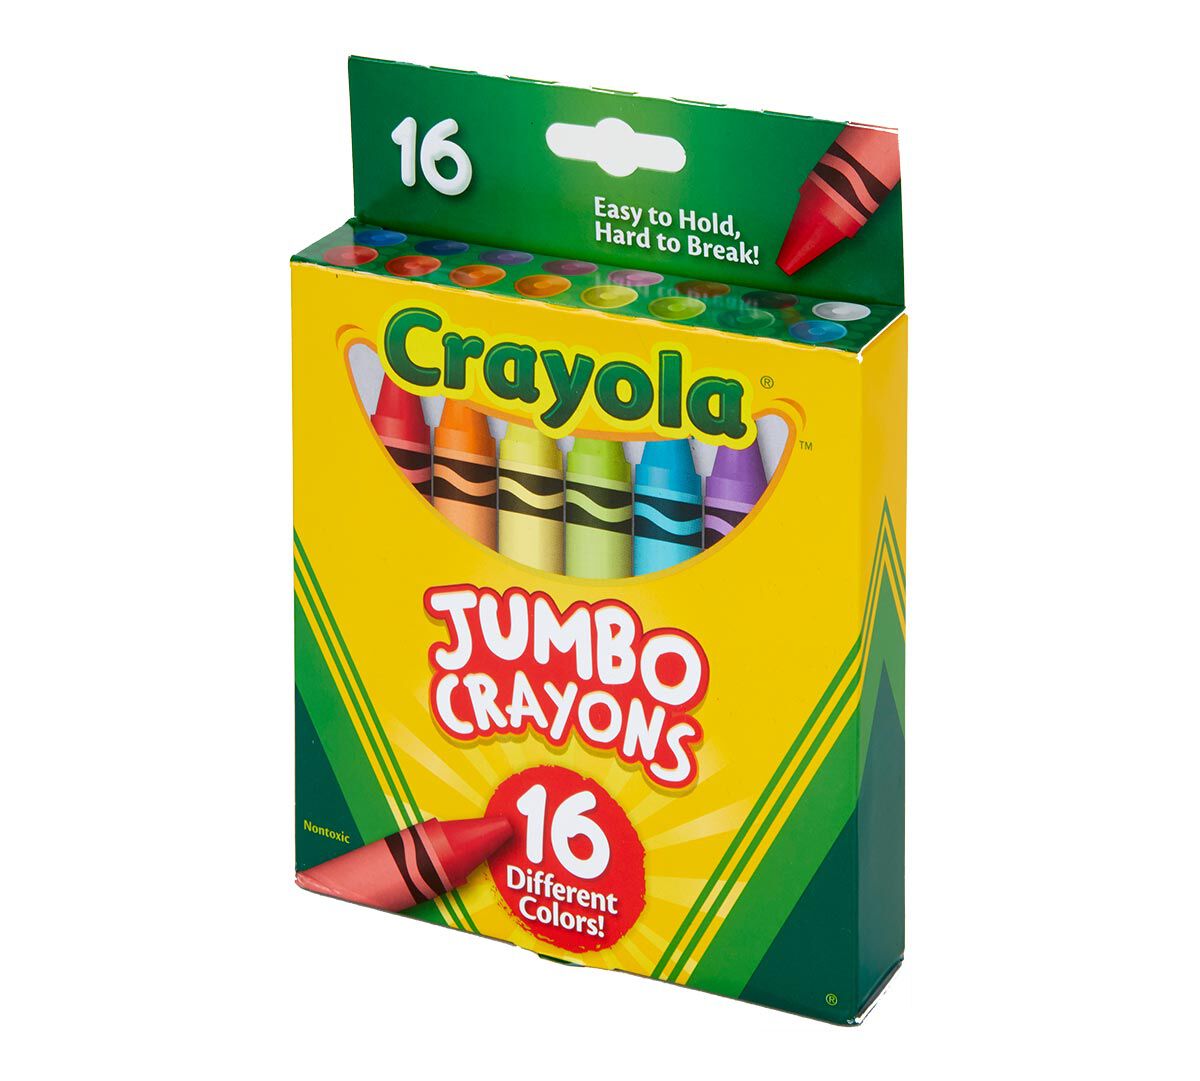 Crayola Jumbo Crayons for Toddlers, Coloring Supplies, 16ct | Crayola